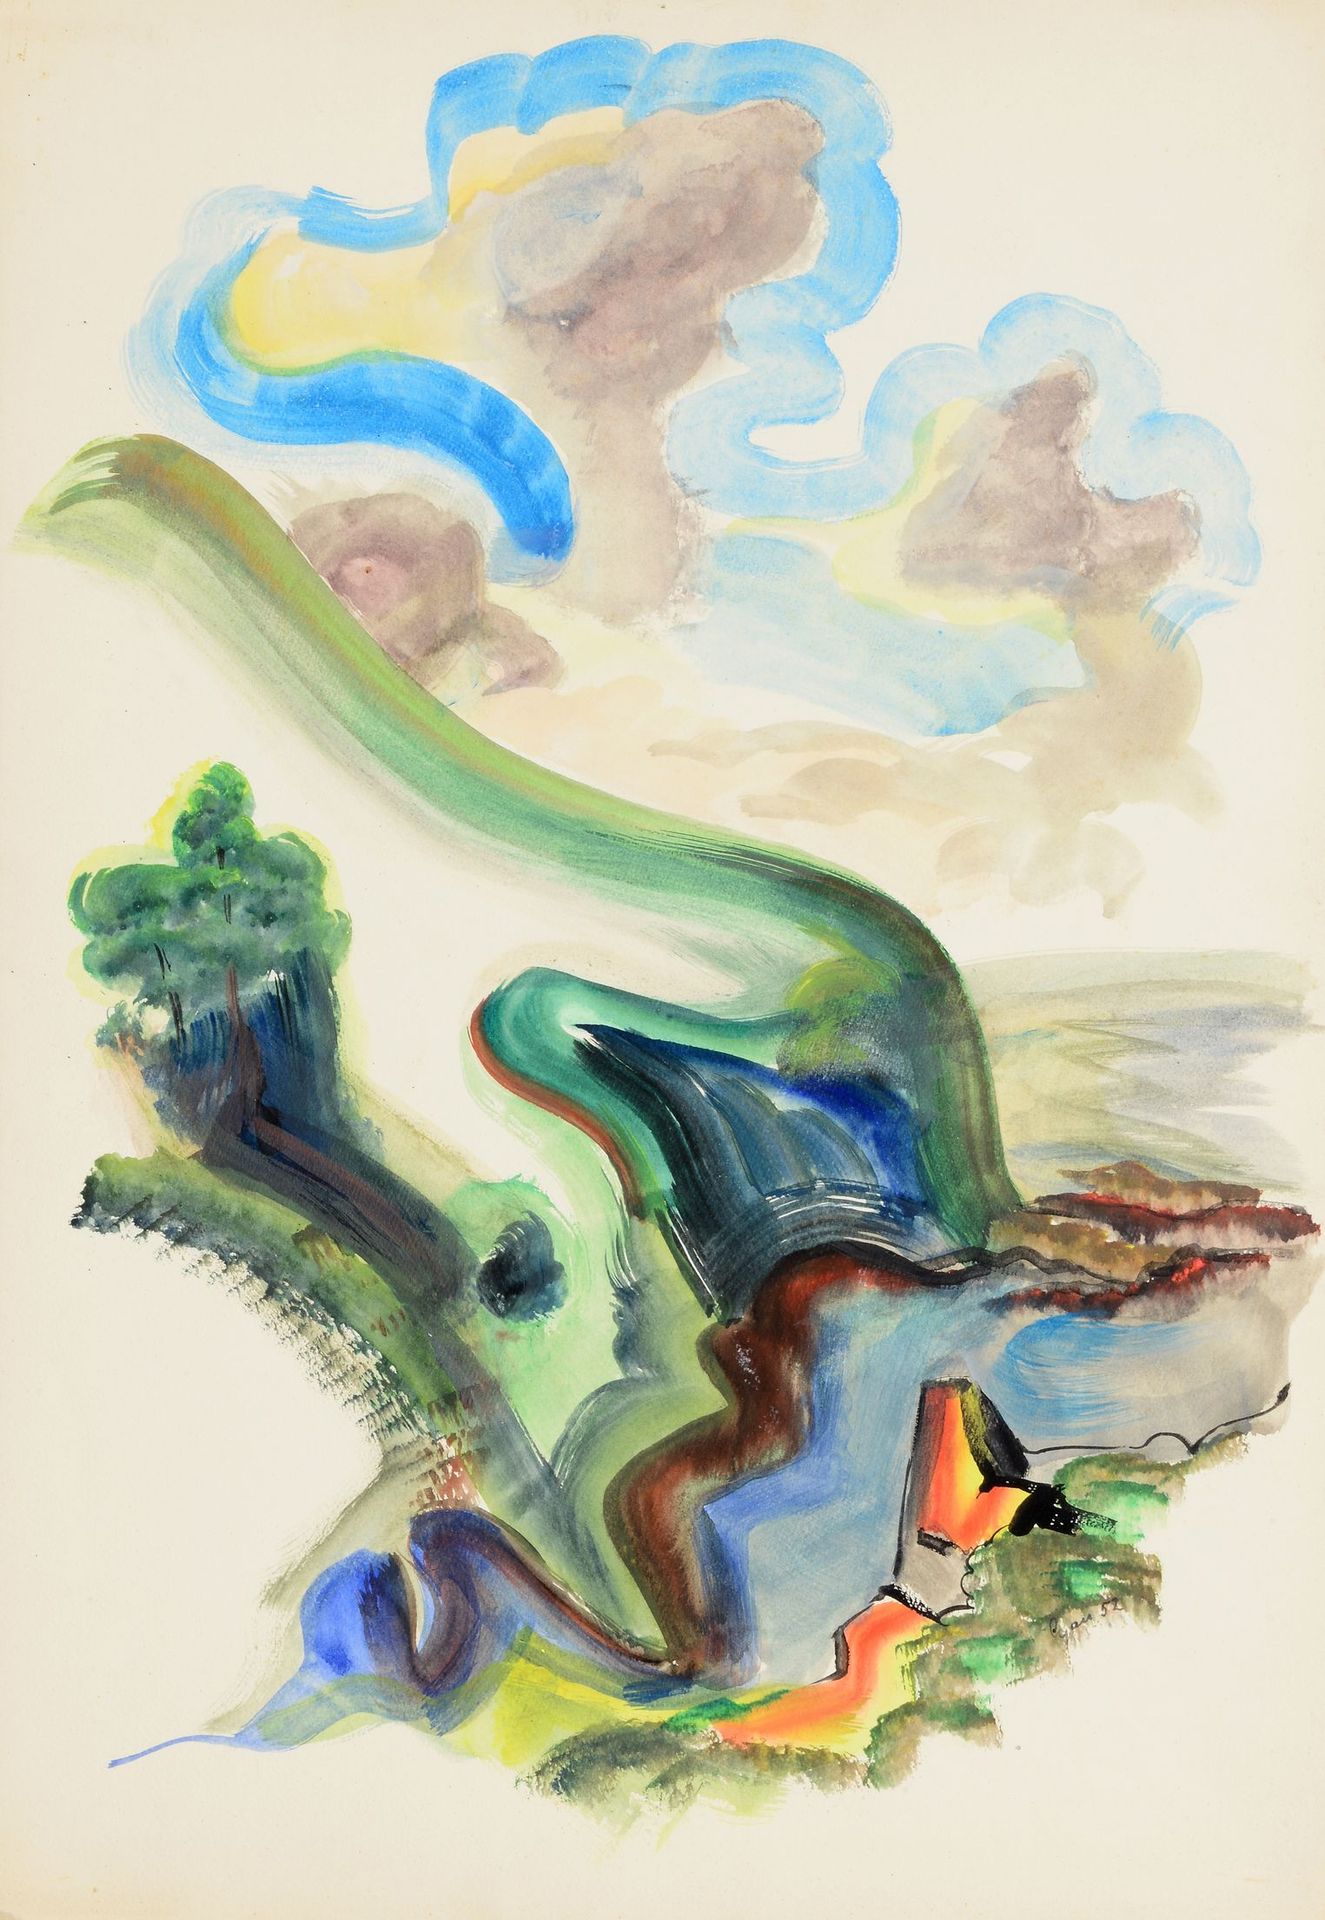 Null Cyan (Zladislaw Cyankiewicz) (1912-1981)

景观

水彩画

无符号

54 x 37,5 cm